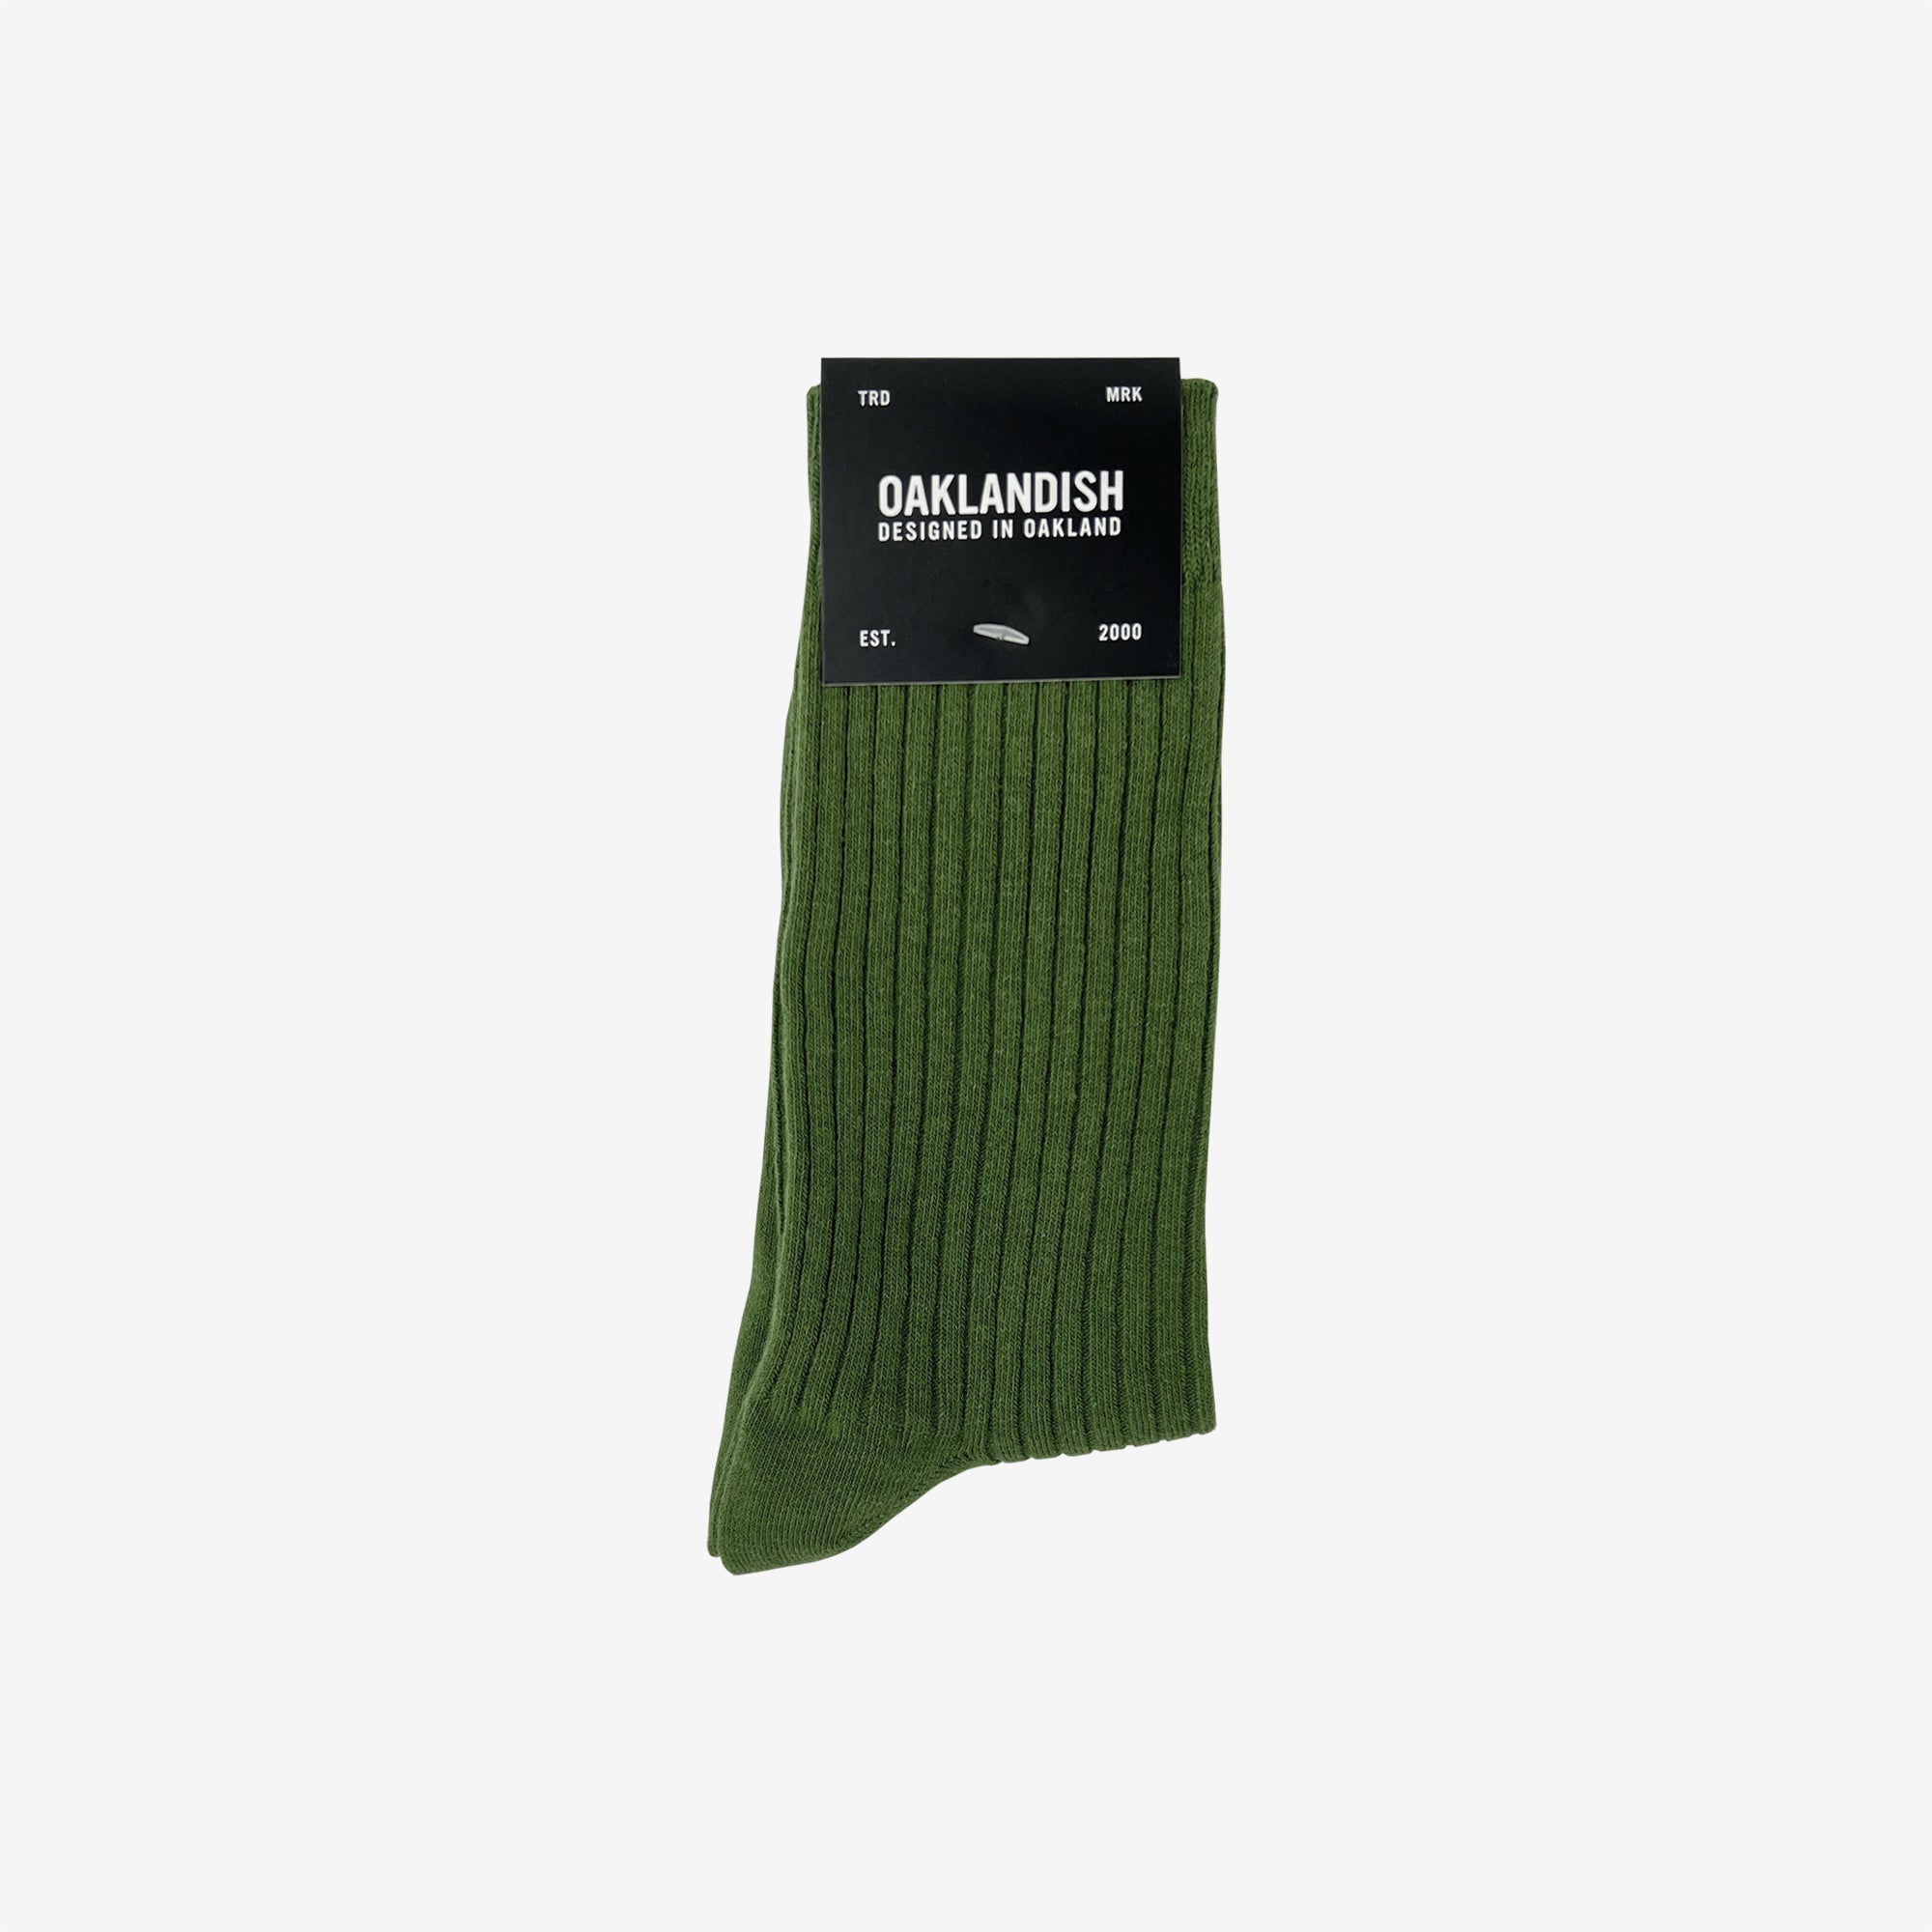 Green high cut men's crew socks in folded Oaklandish retail packaging.